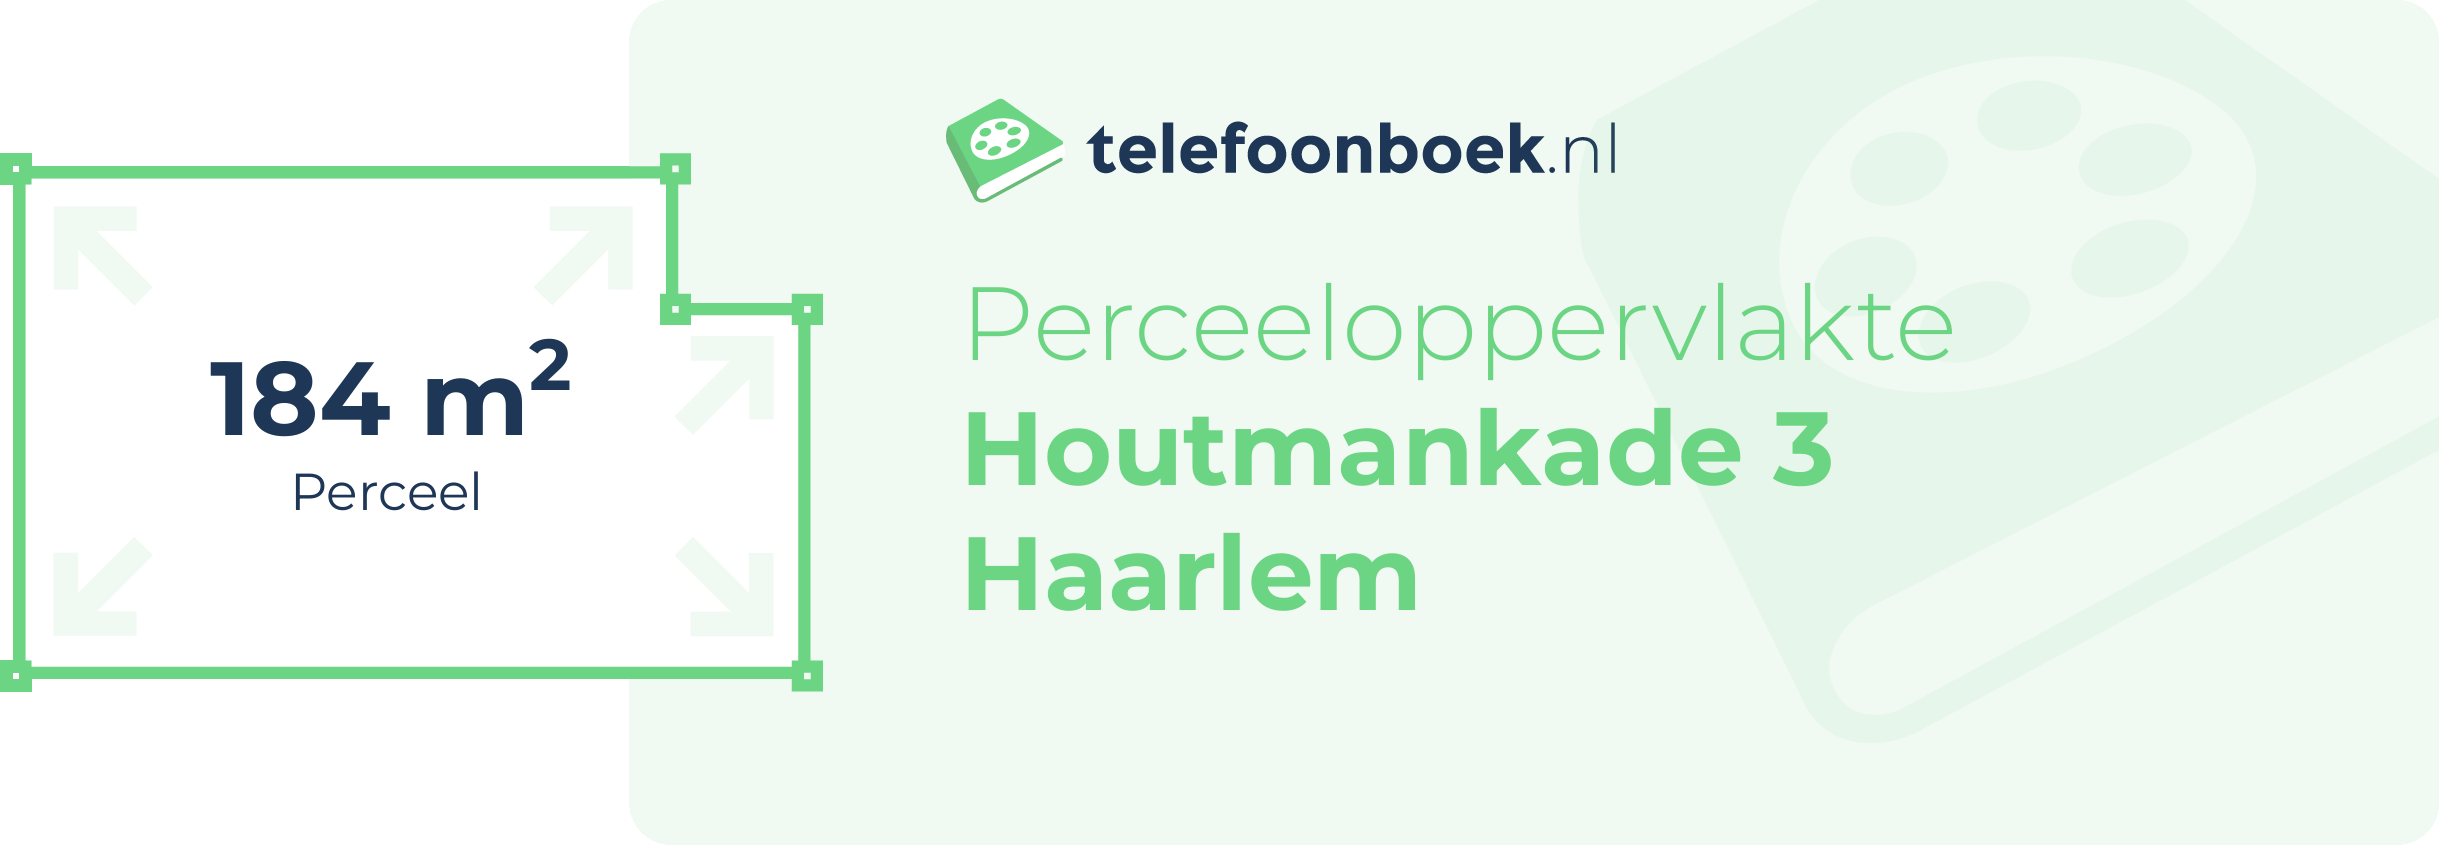 Perceeloppervlakte Houtmankade 3 Haarlem